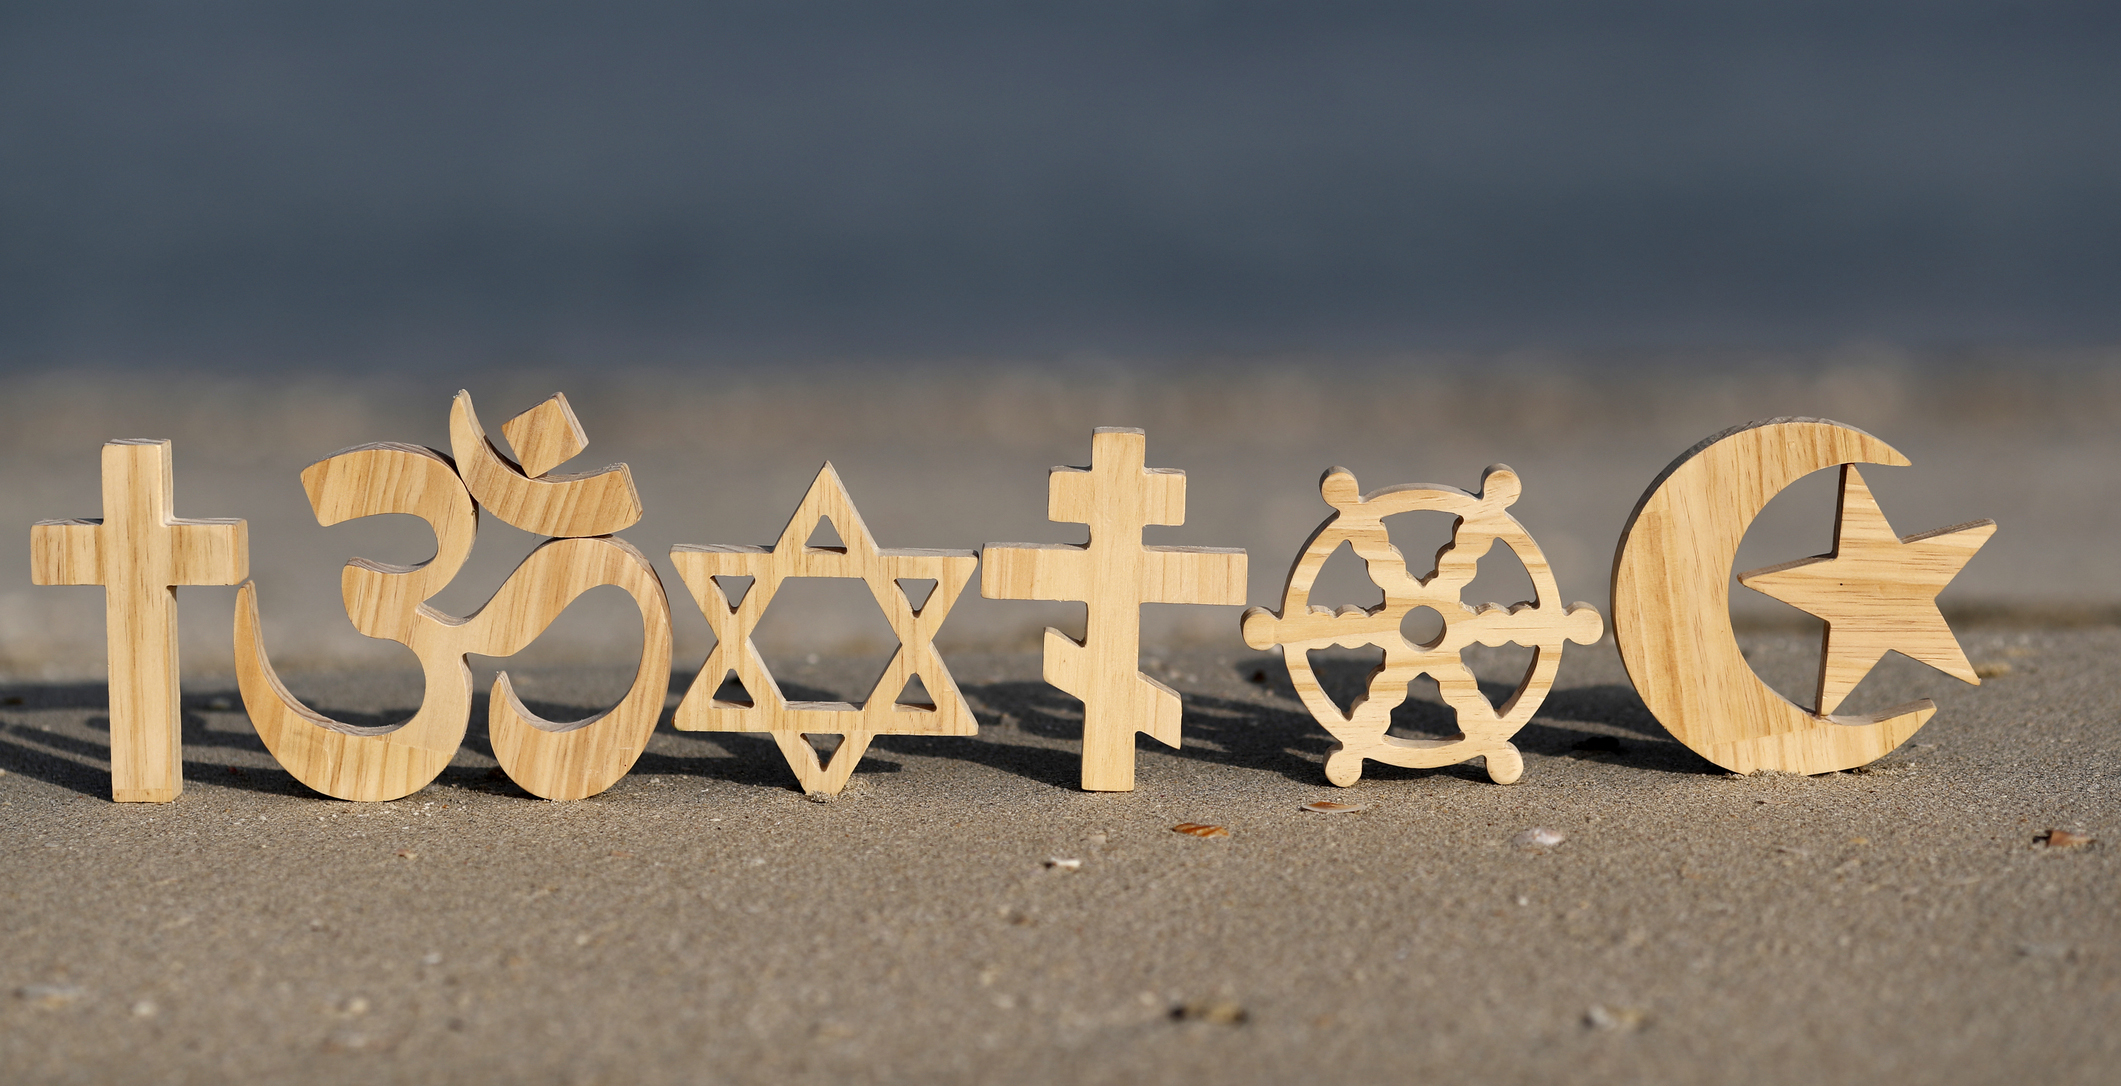 Symbols of various religions